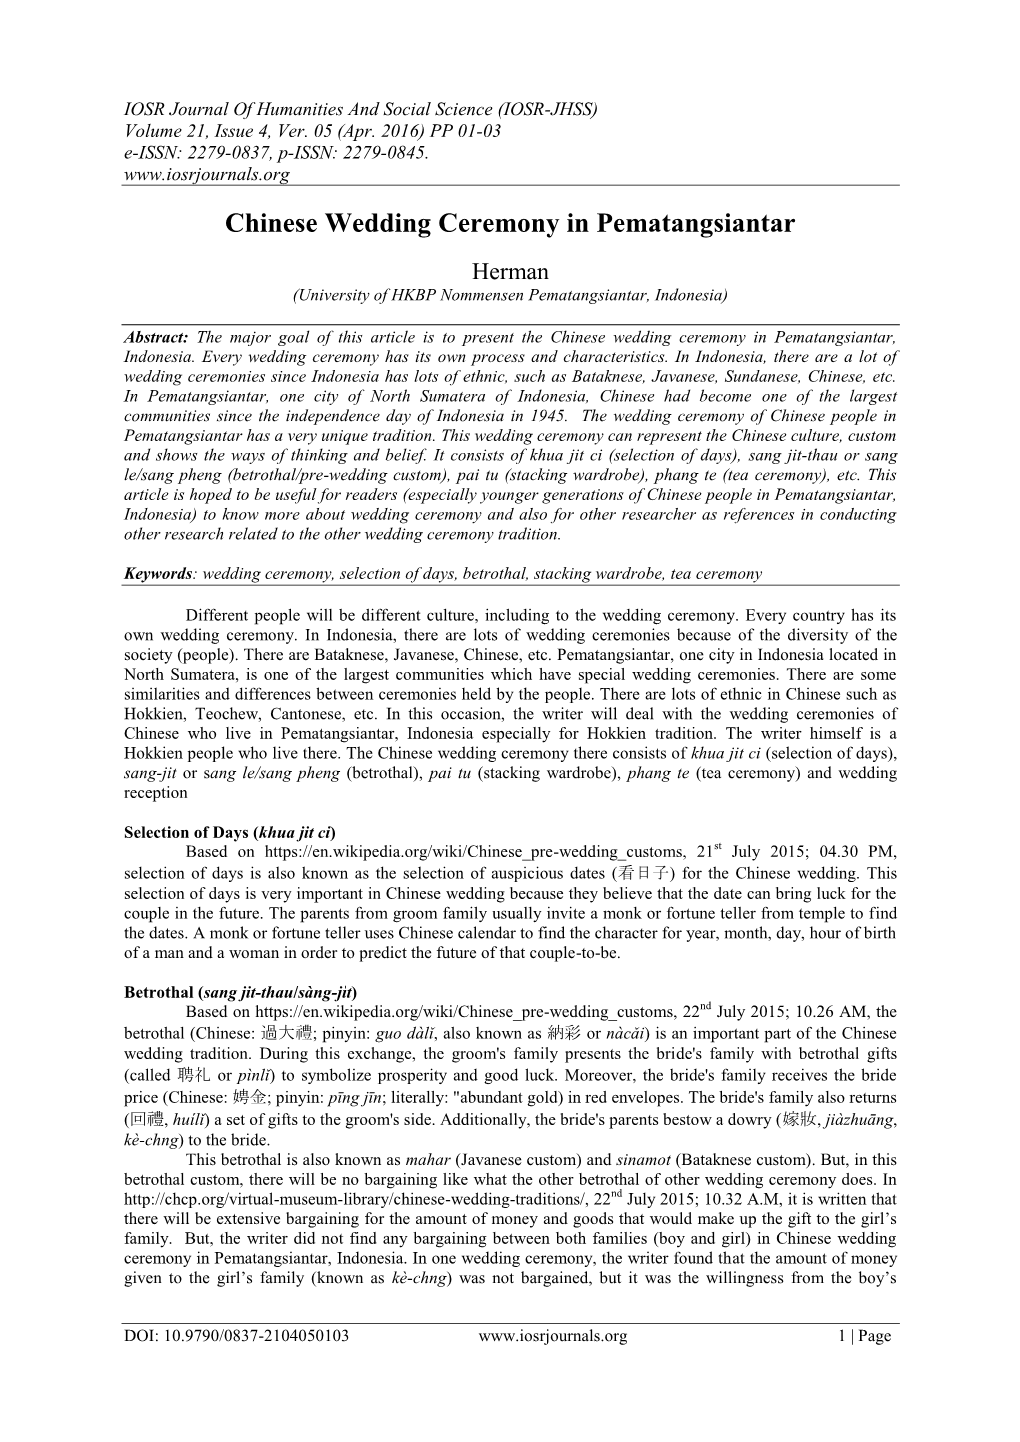 Chinese Wedding Ceremony in Pematangsiantar